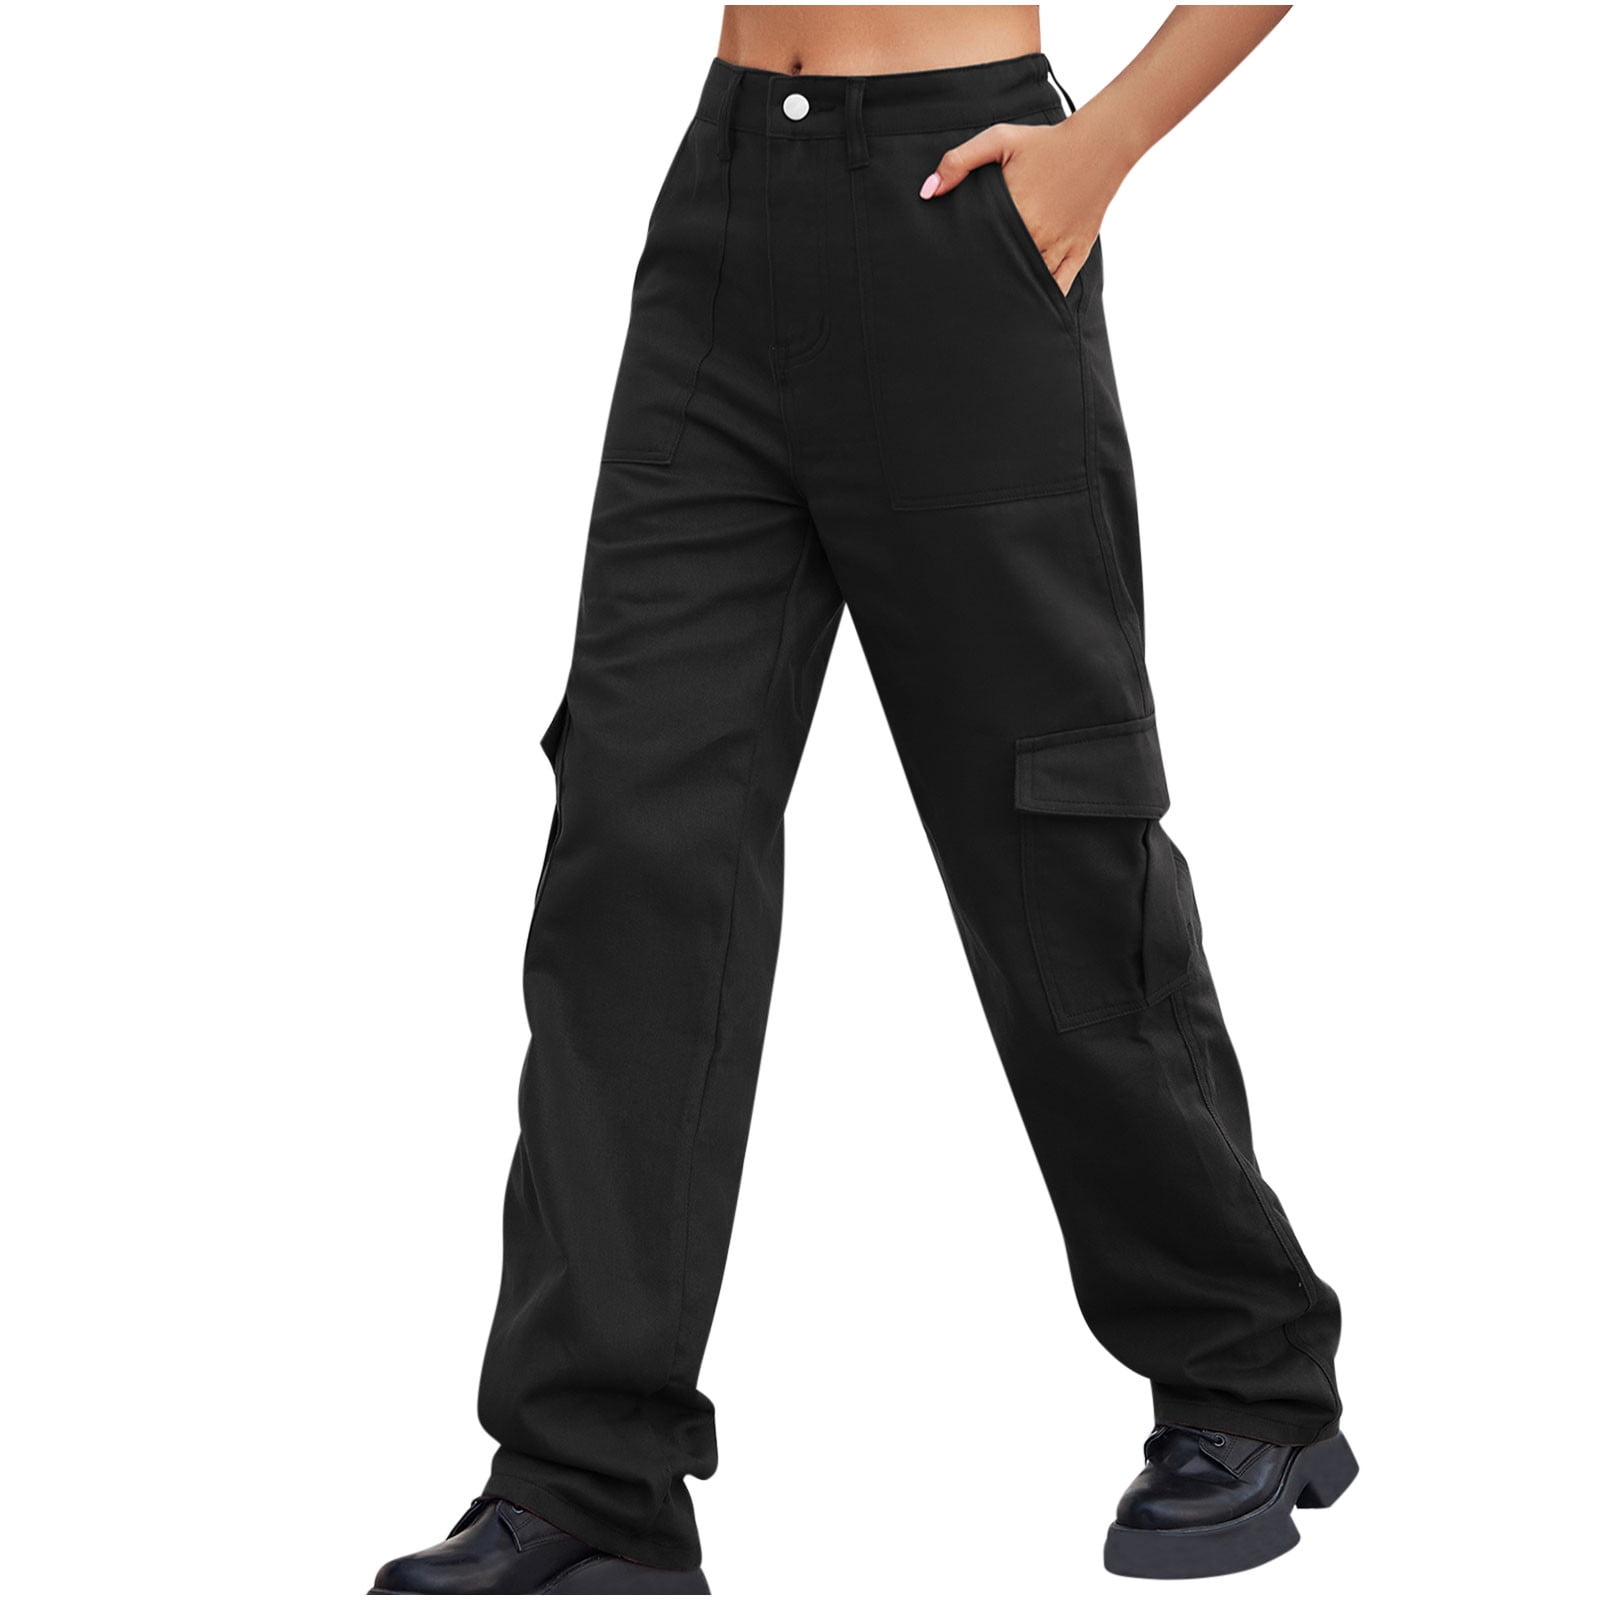 Srs Enterprises Toko pants for women & girls, cargo pants for